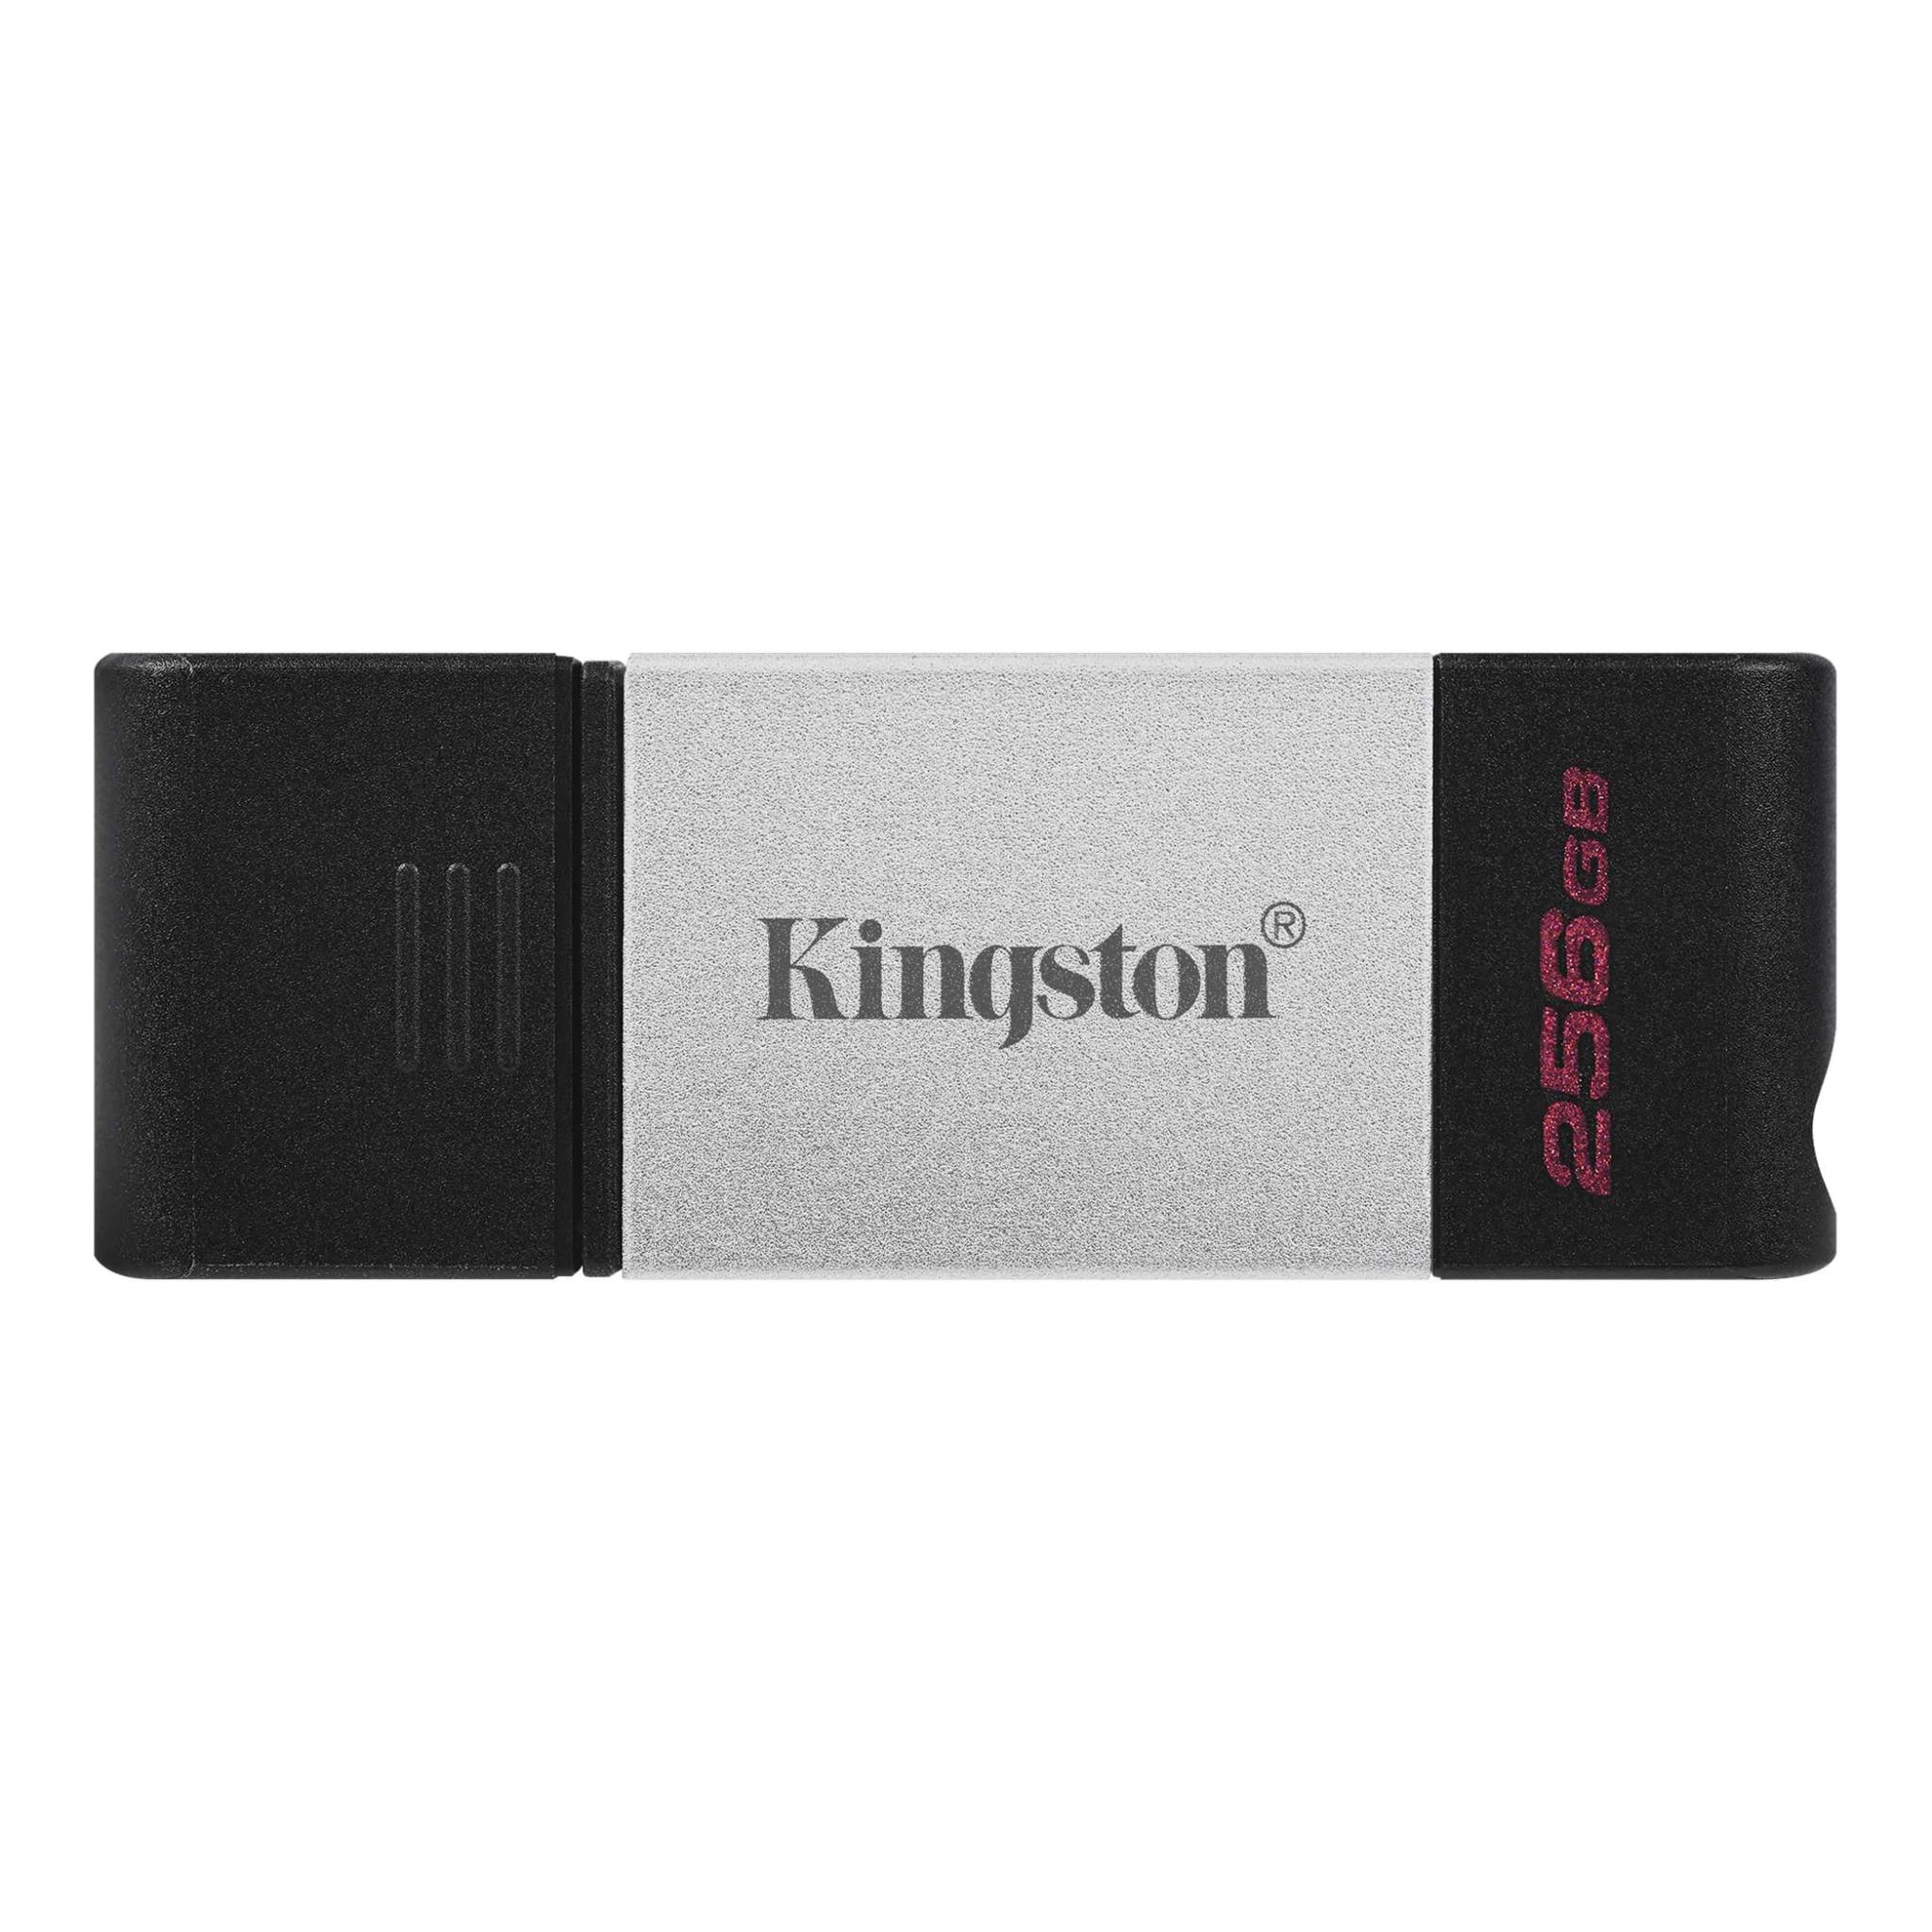 USB-C FlashDrive Kingston DT80 256GB DT80/256GB (EU Blister)